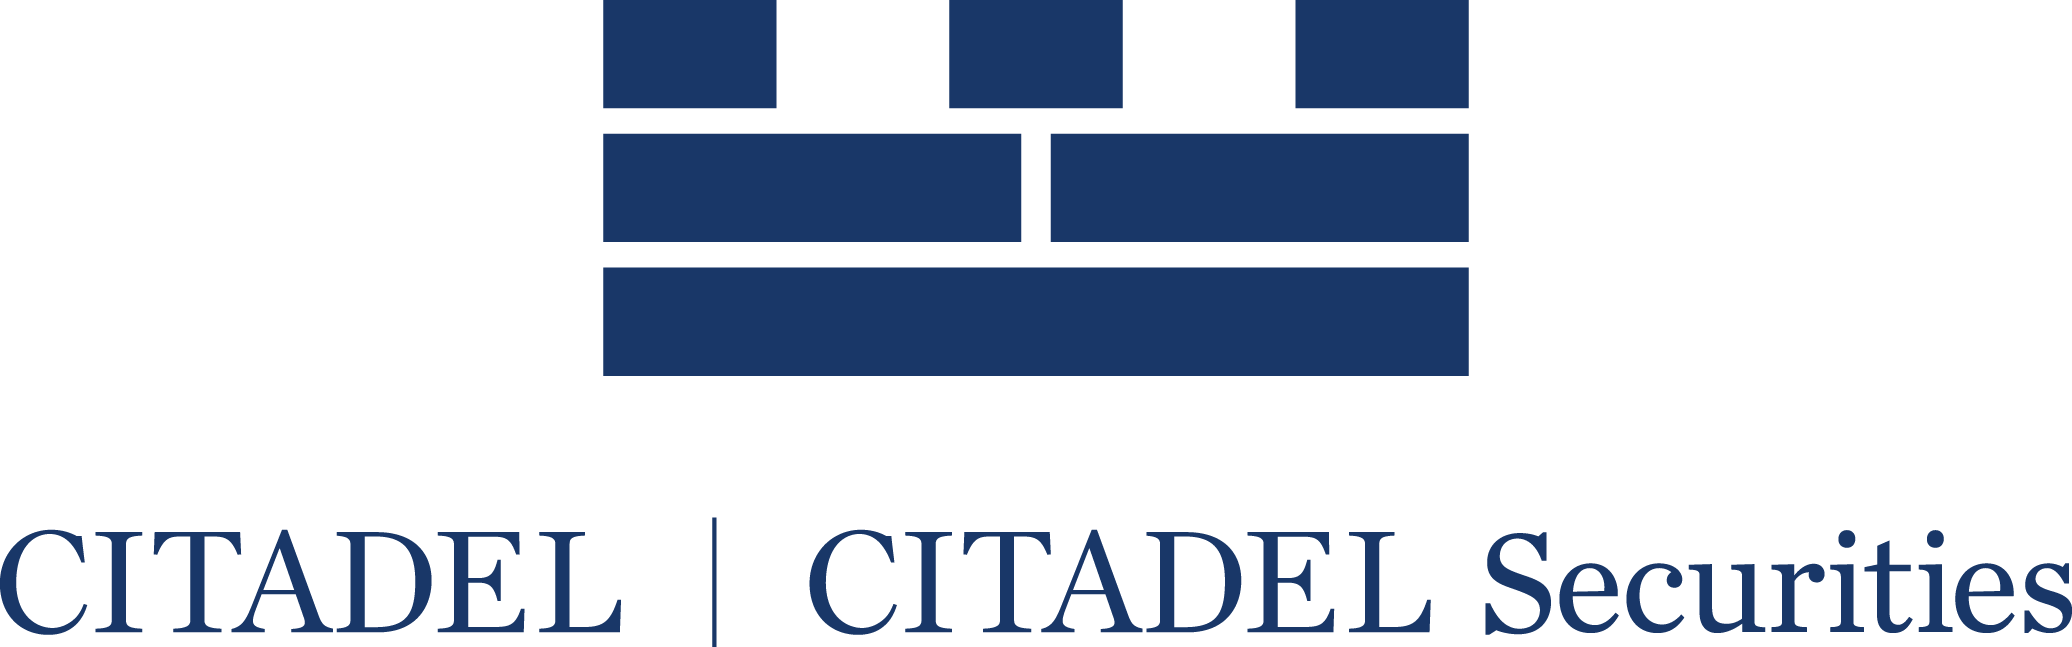 Citadel and Citadel Securities log. Blue stacked blocks.